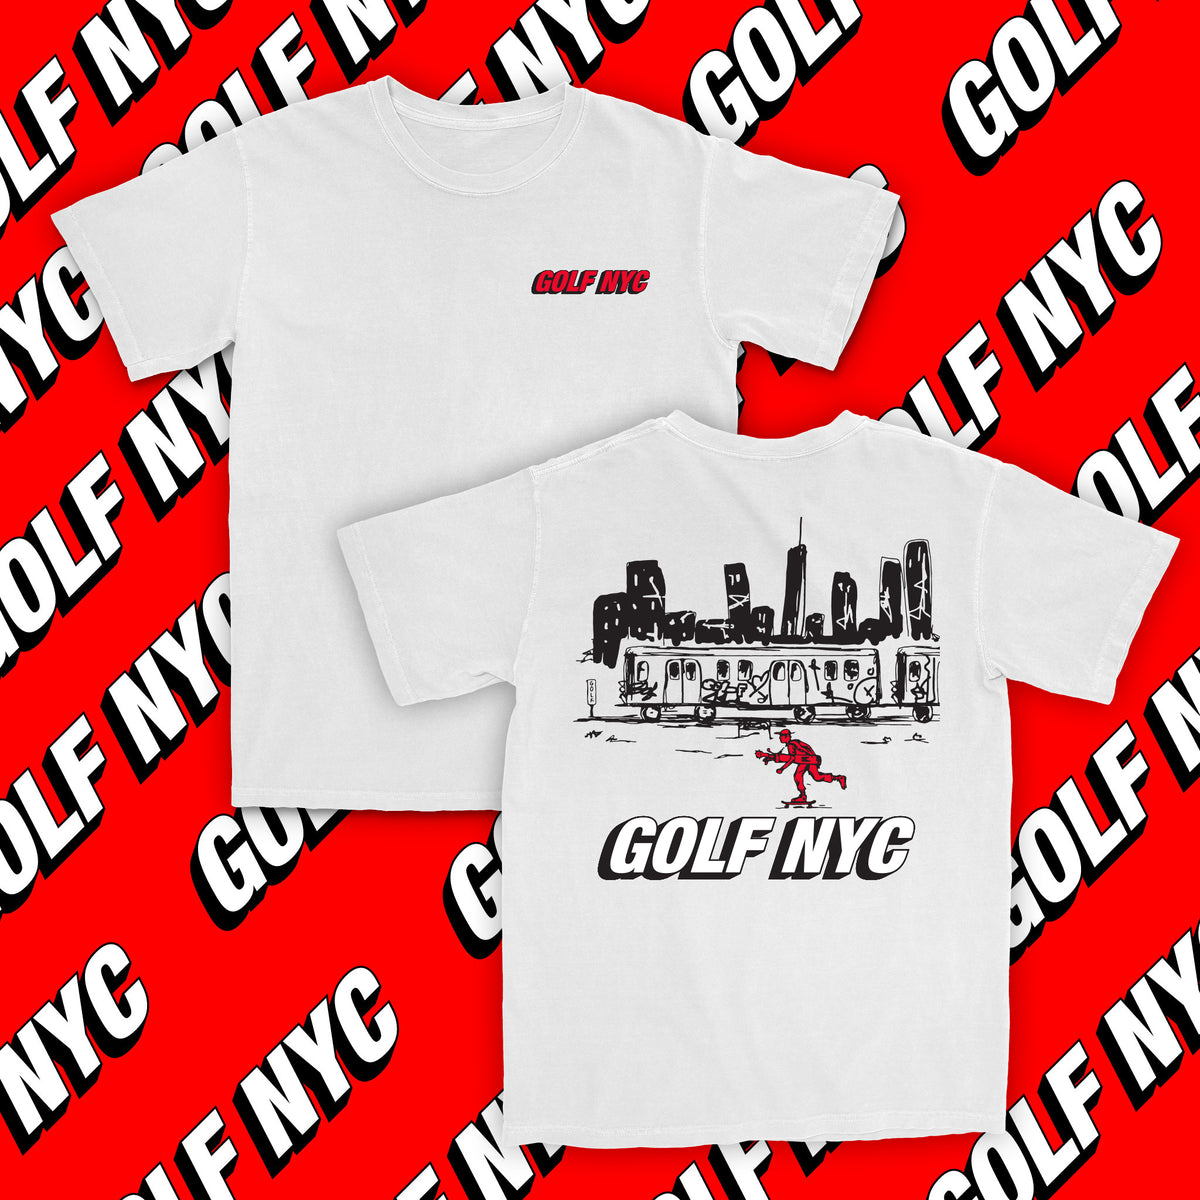 GOLF NYC (White/Black/Red)